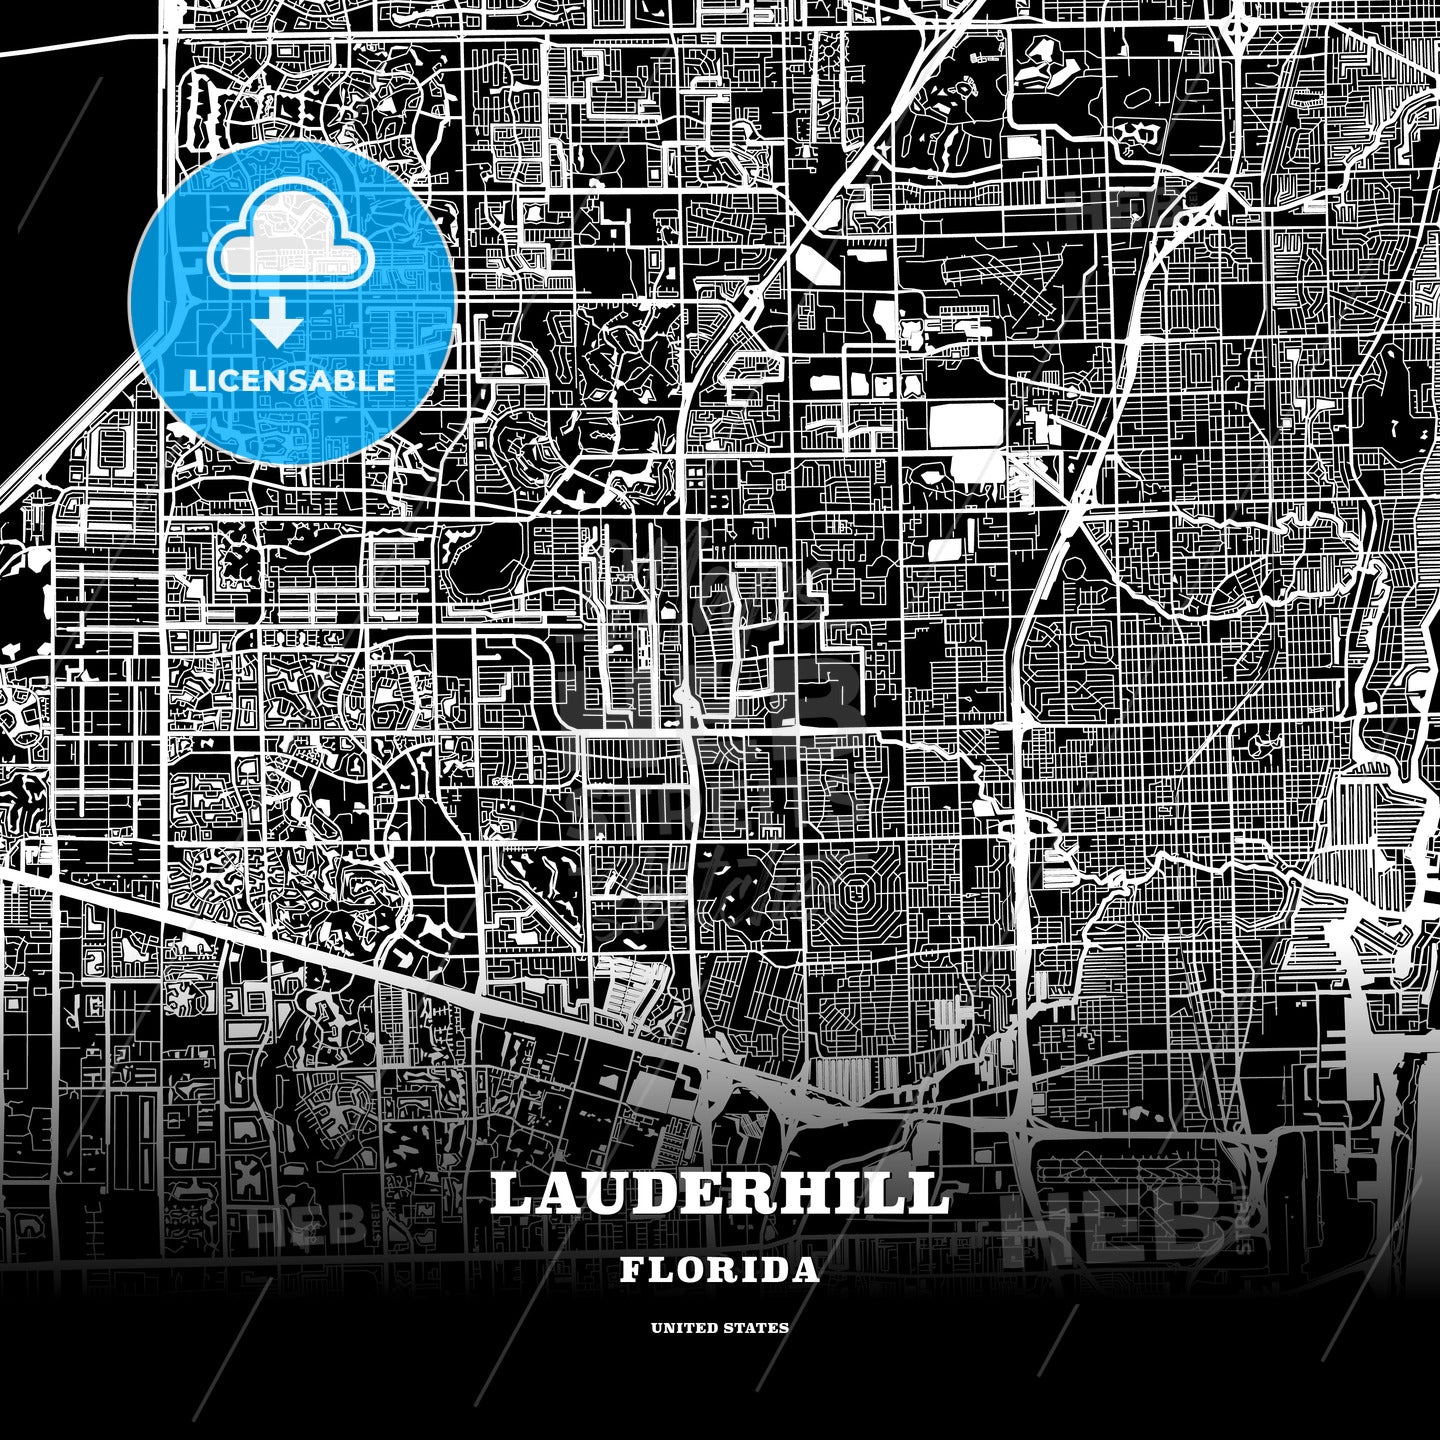 Lauderhill, Florida, USA map